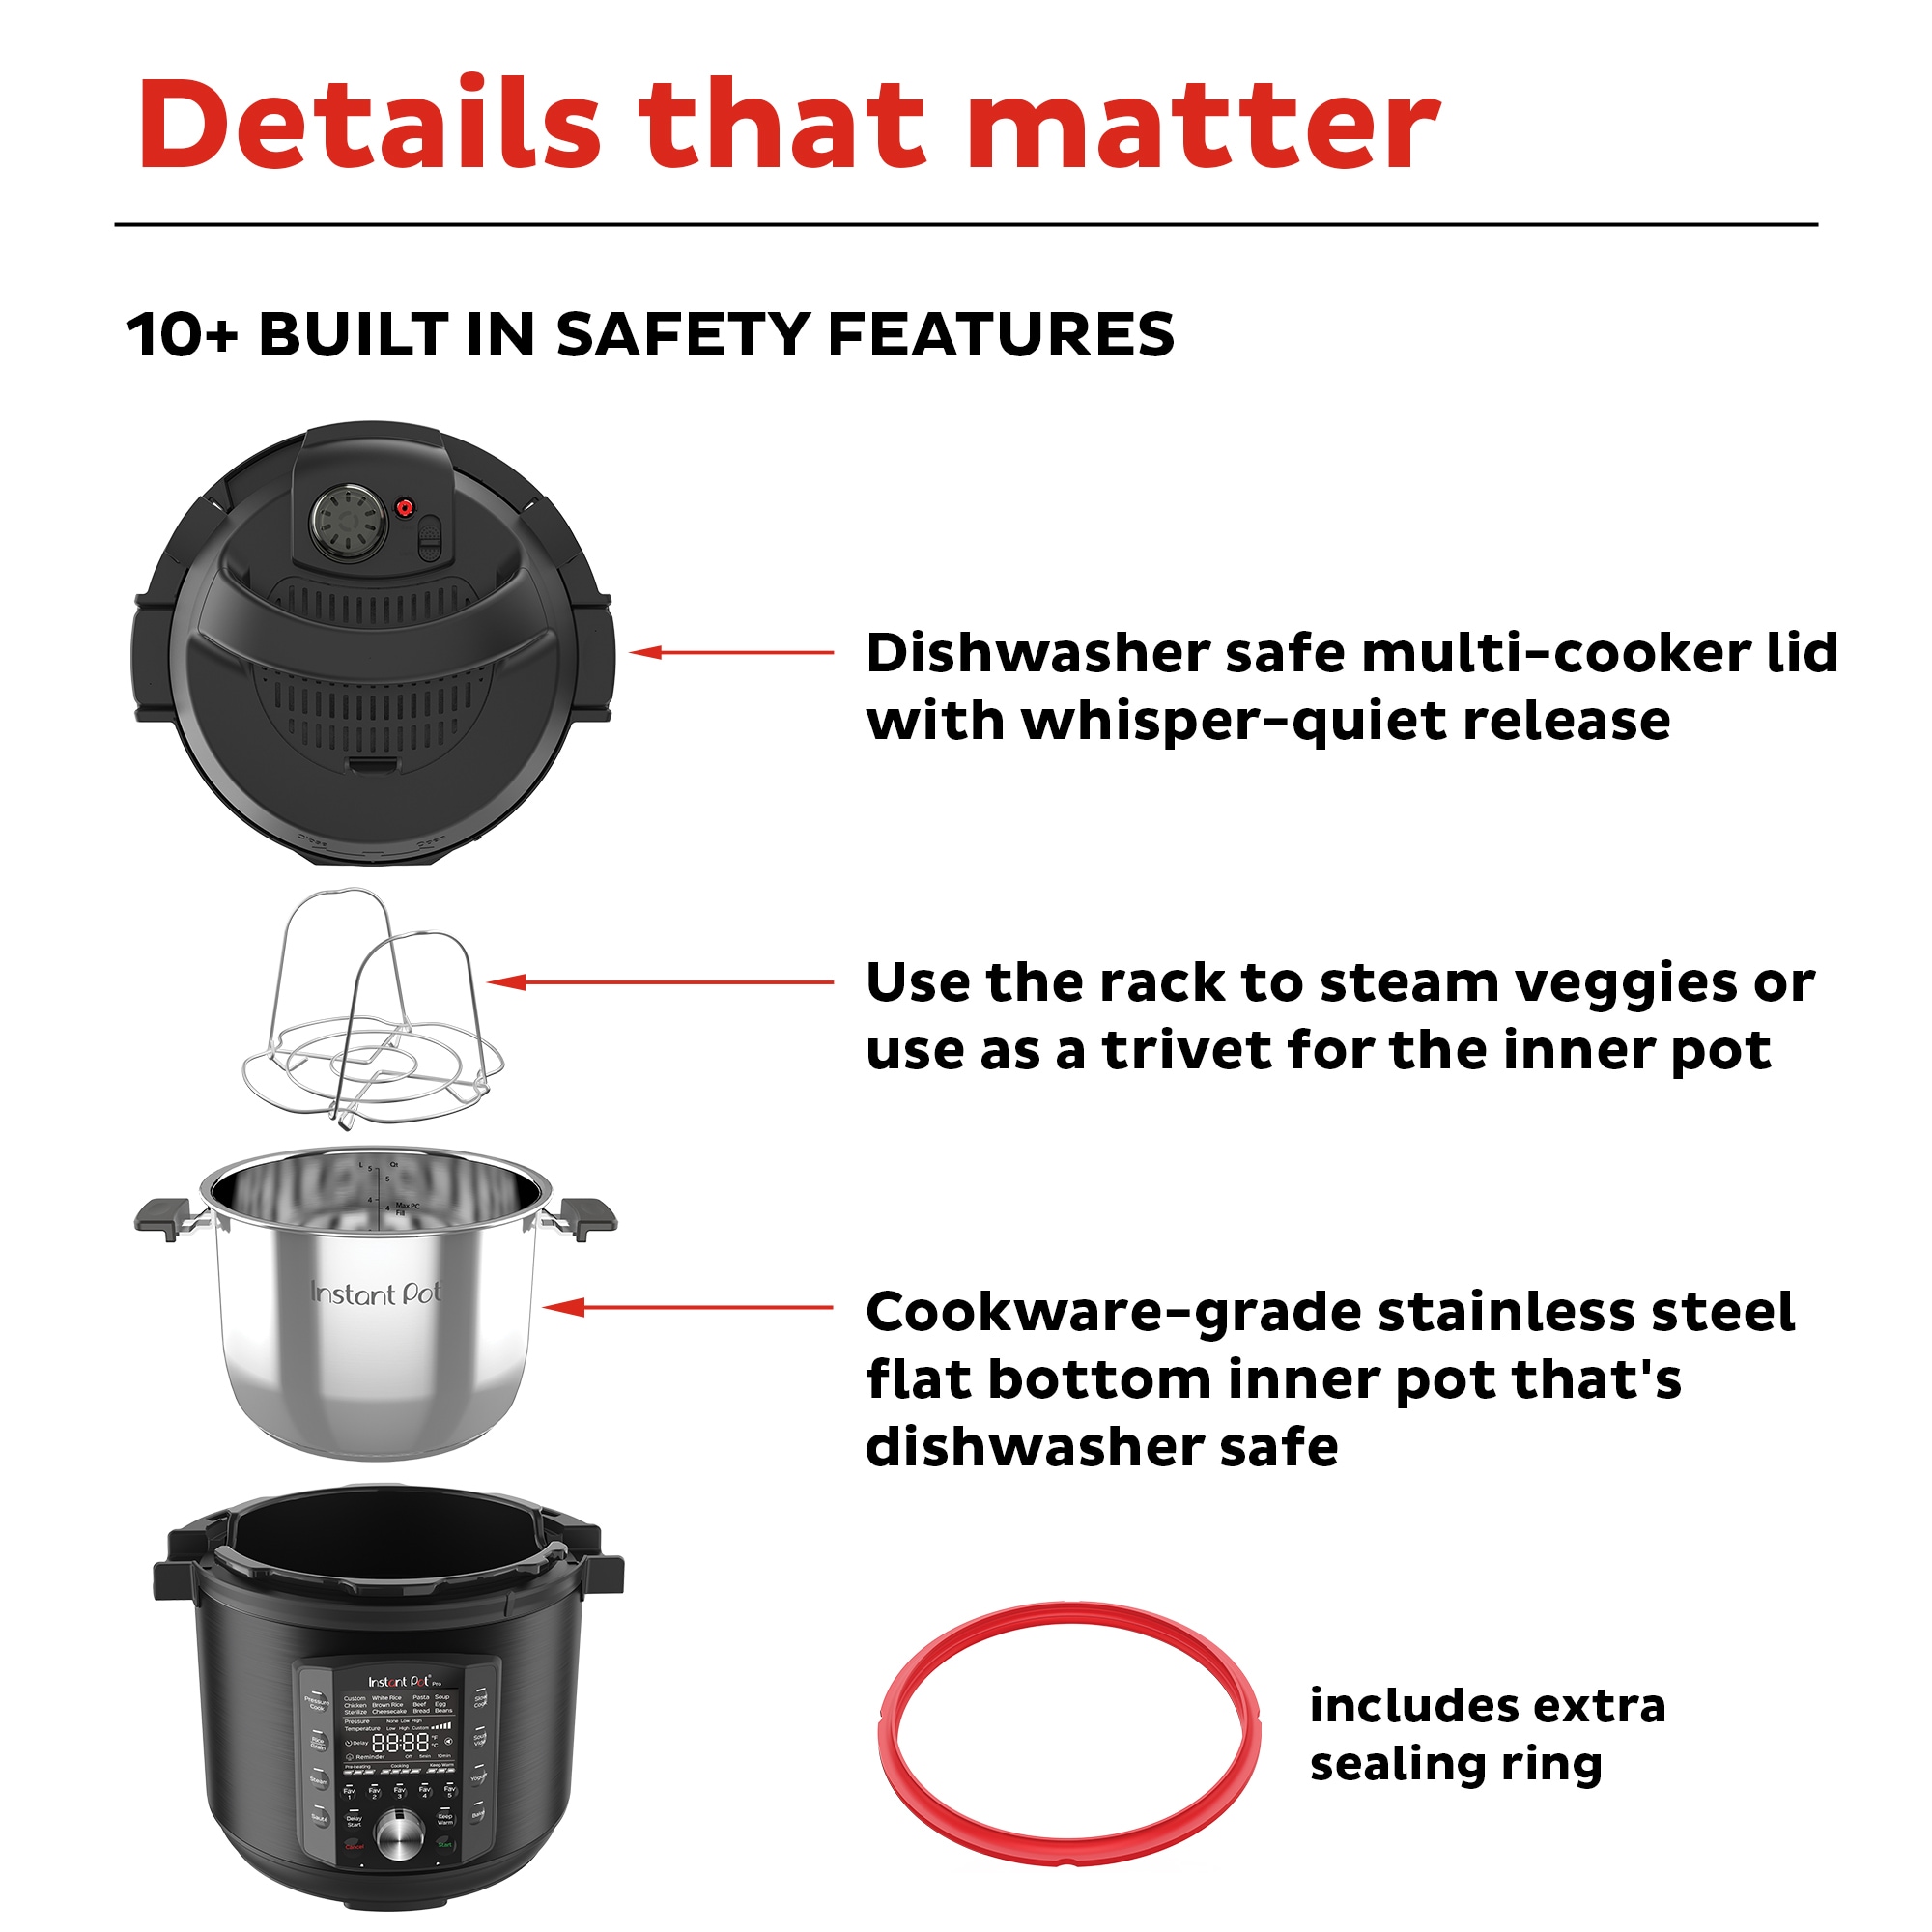 Instant Pot 6qt Pro Electric Pressure Cooker Black 112-0123-01 - Best Buy